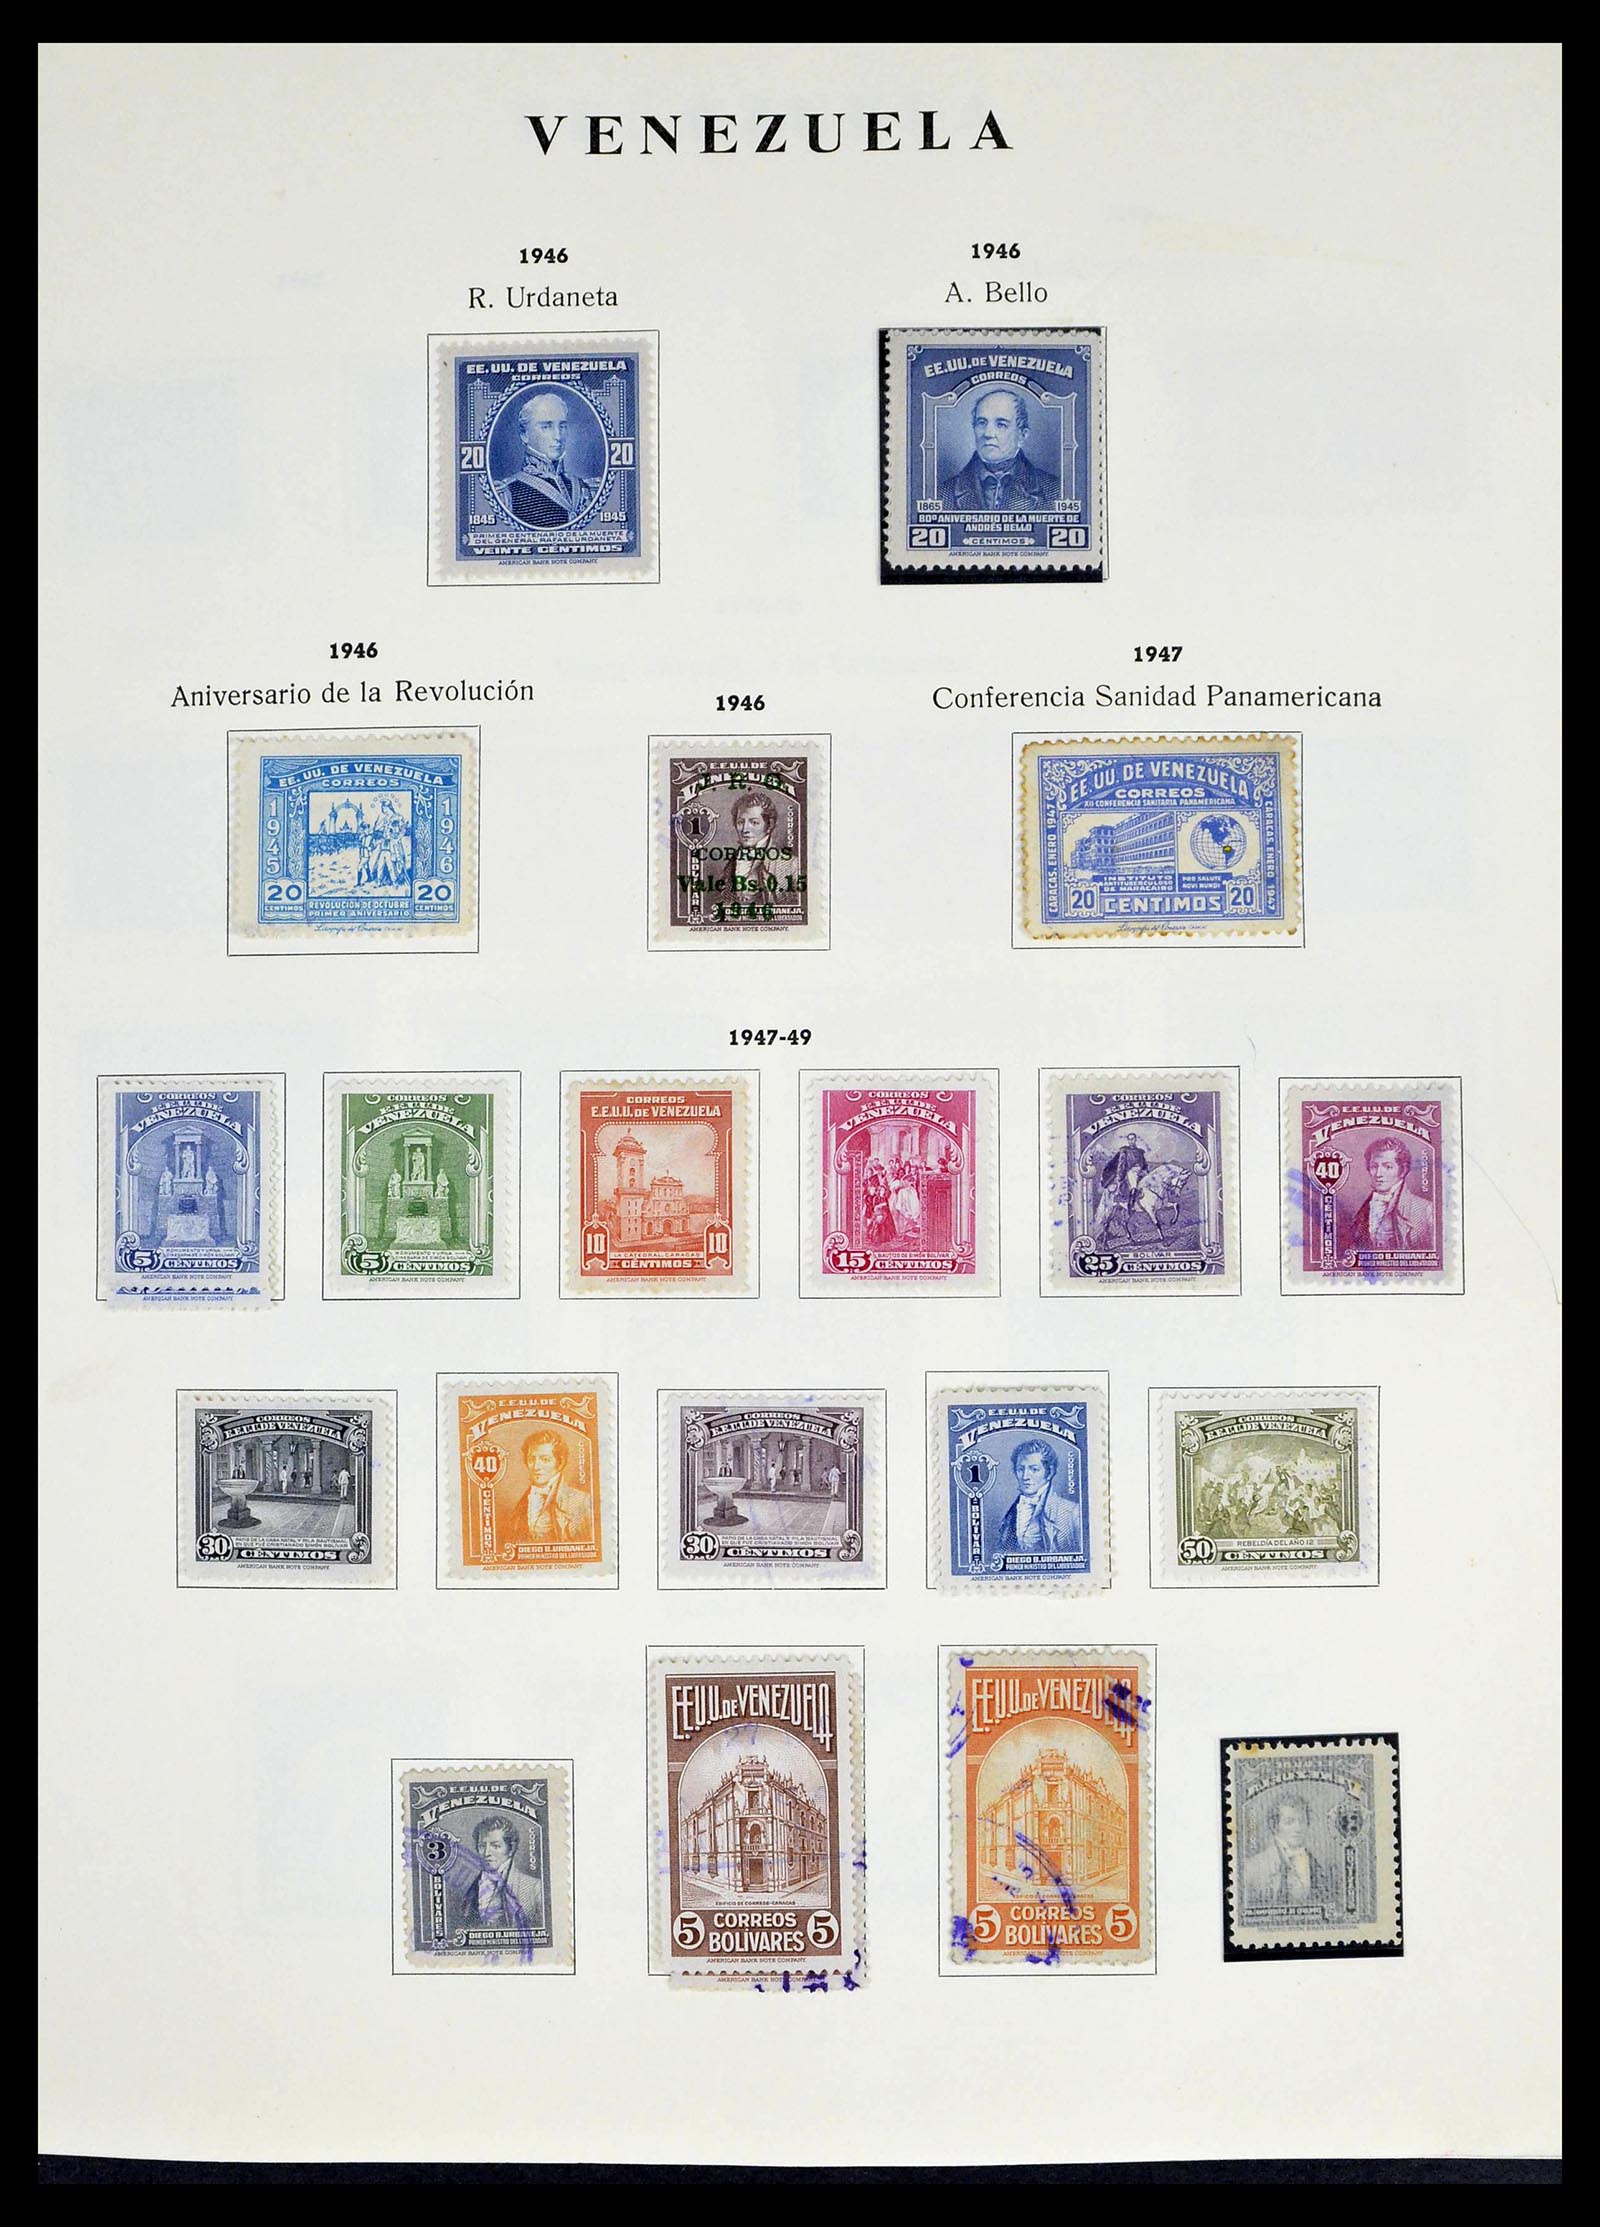 39223 0019 - Stamp collection 39223 Venezuela 1859-1984.